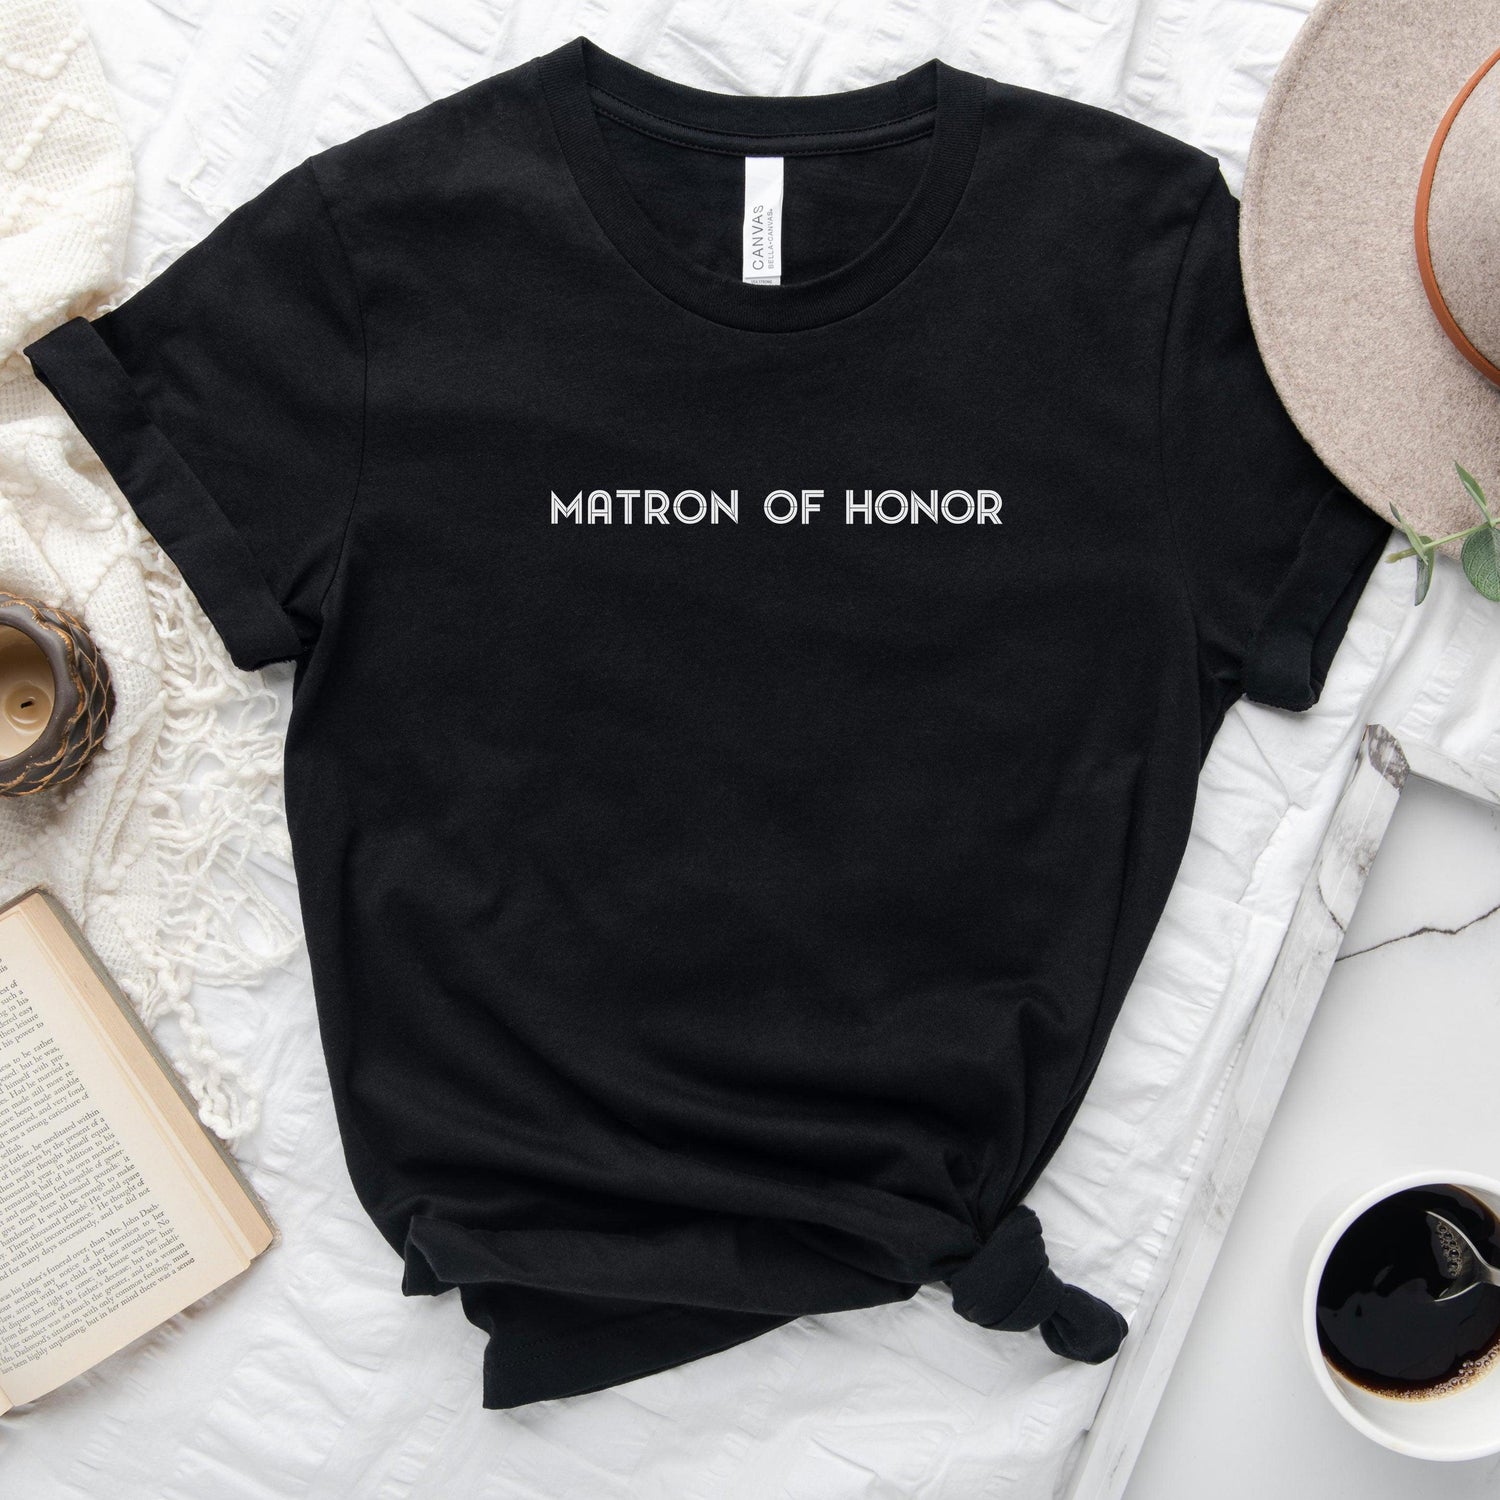 Matron of Honor Wedding Tshirt - Gift for MOH - Bridesmaid Retro Proposal Box Graphic Tee by Oaklynn Lane